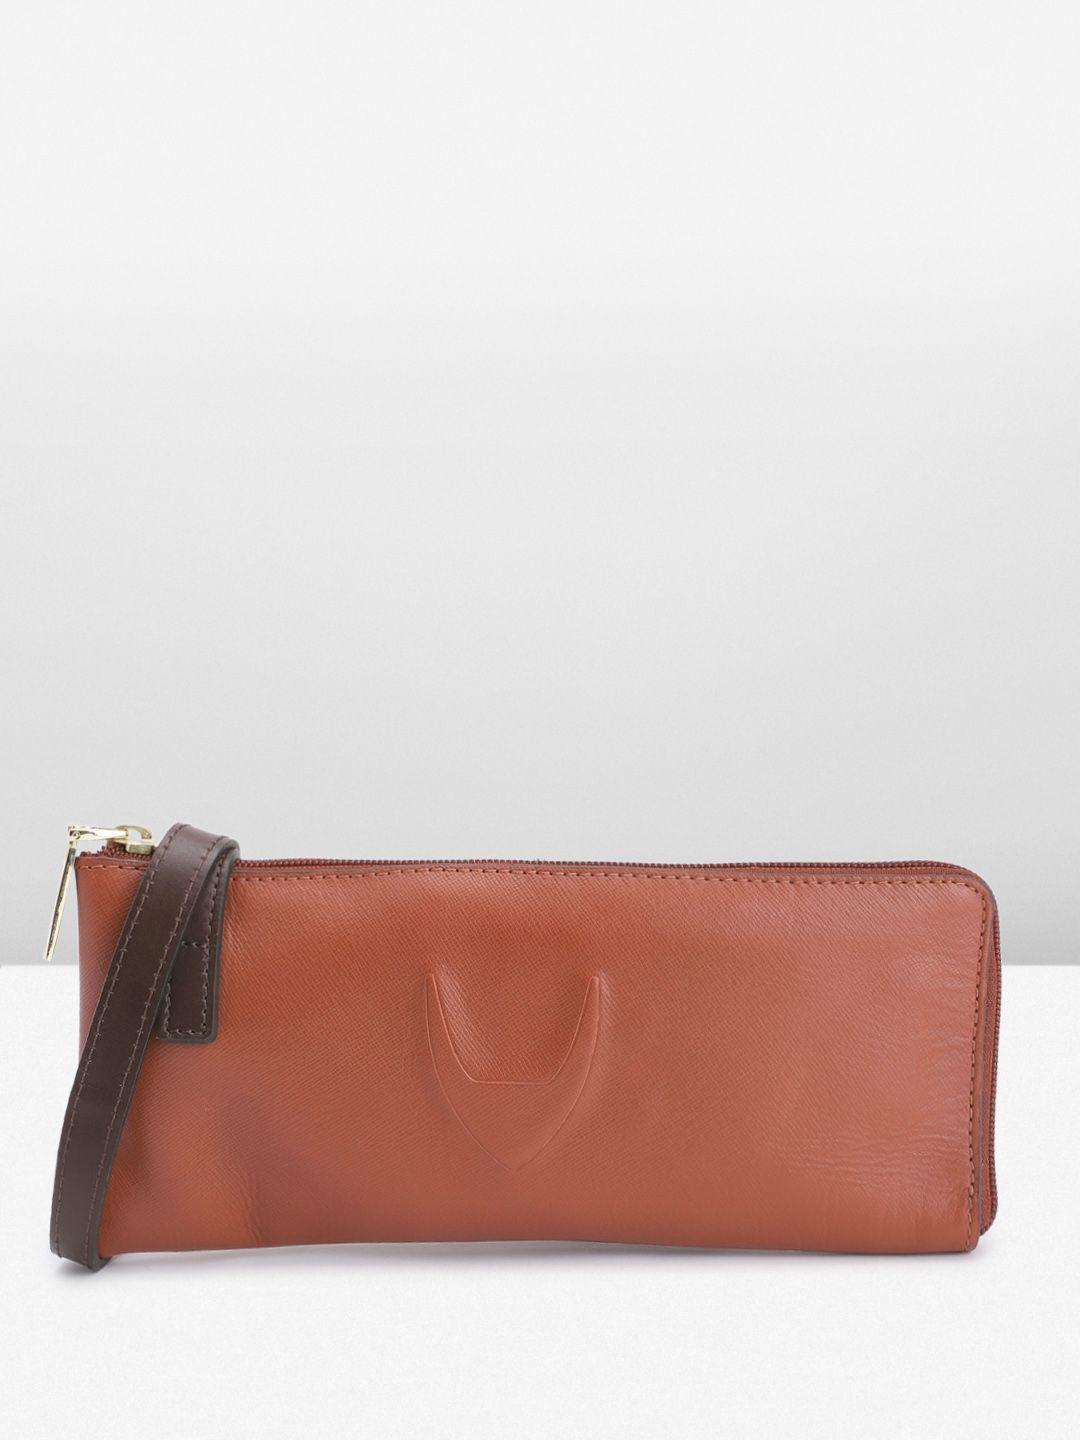 hidesign women leather zip around wallet